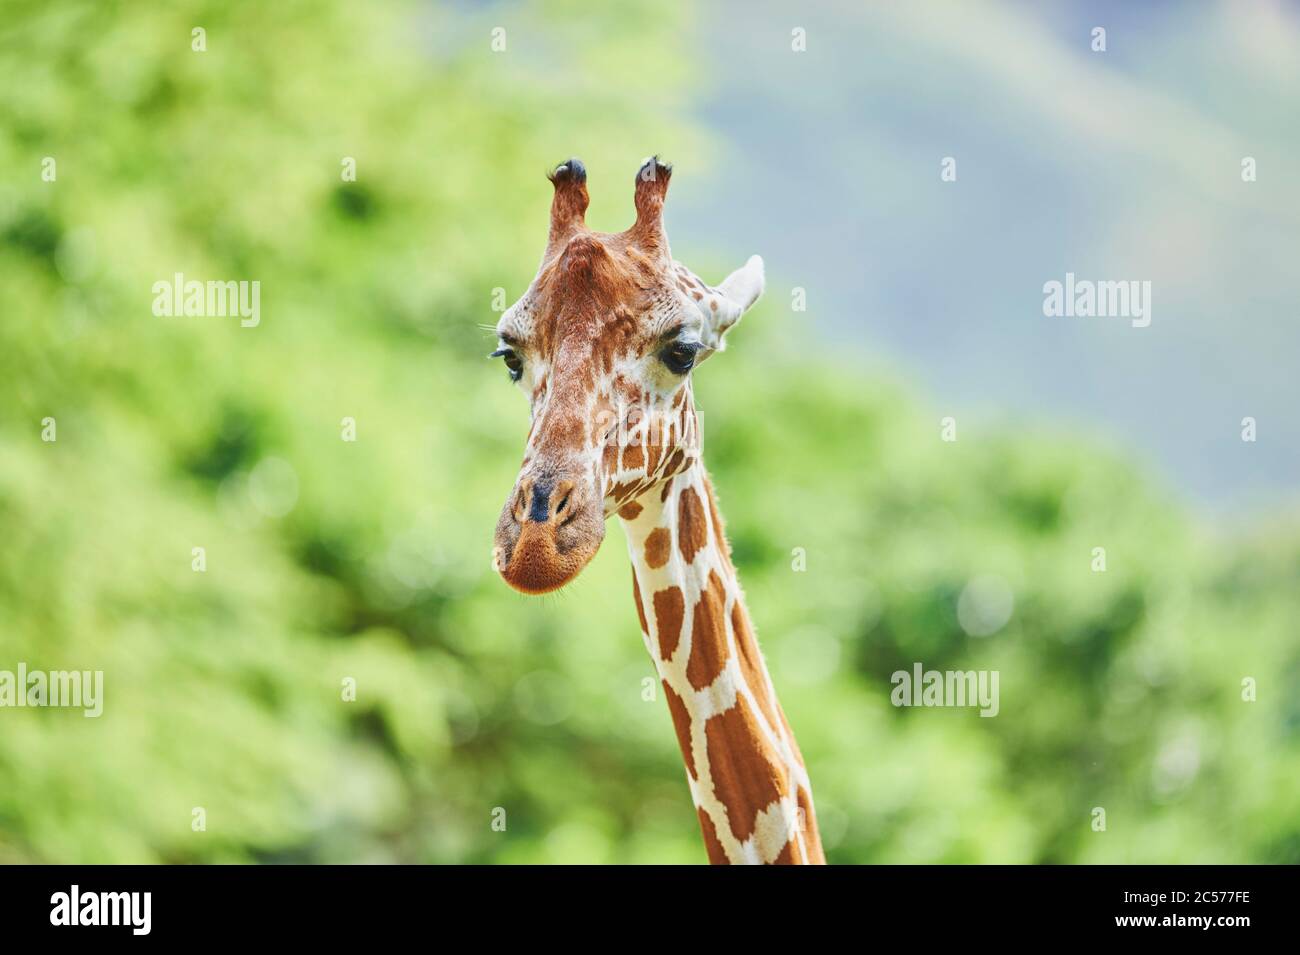 Reticulated giraffe, Giraffa camelopardalis reticulata, portrait, sideways, Stock Photo